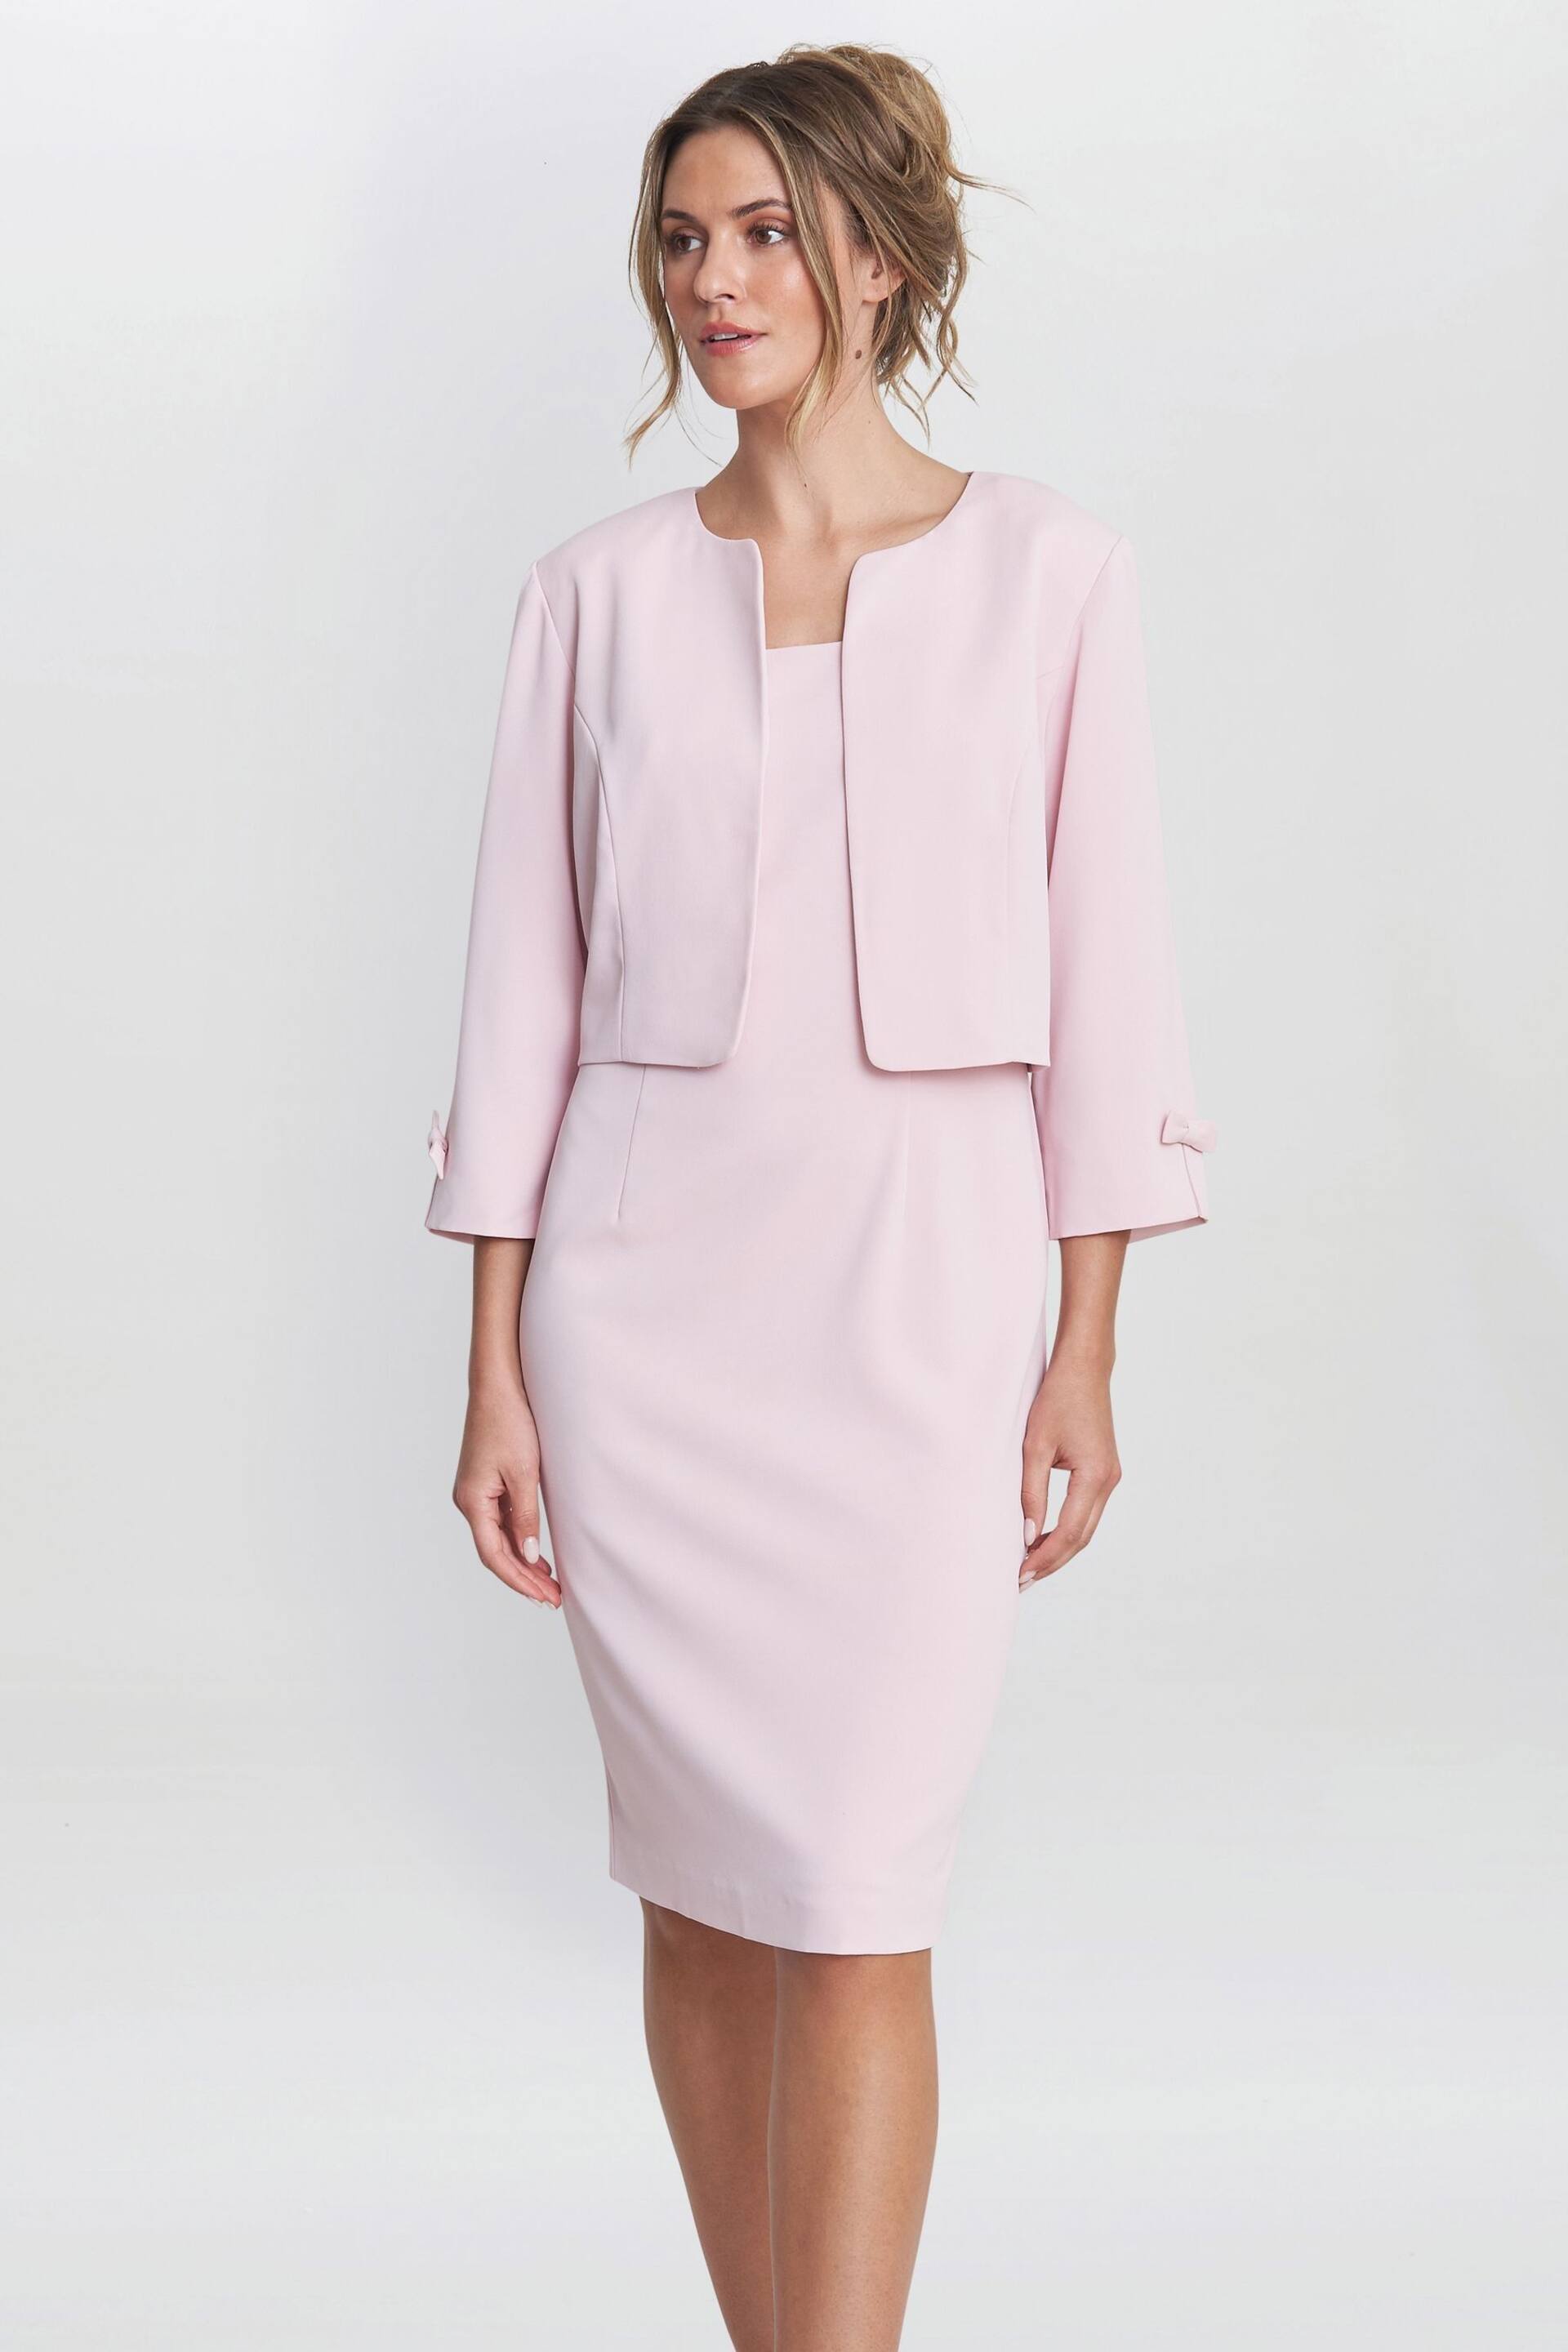 Gina Bacconi Pink Corinne Crepe Dress And Jacket - Image 1 of 6